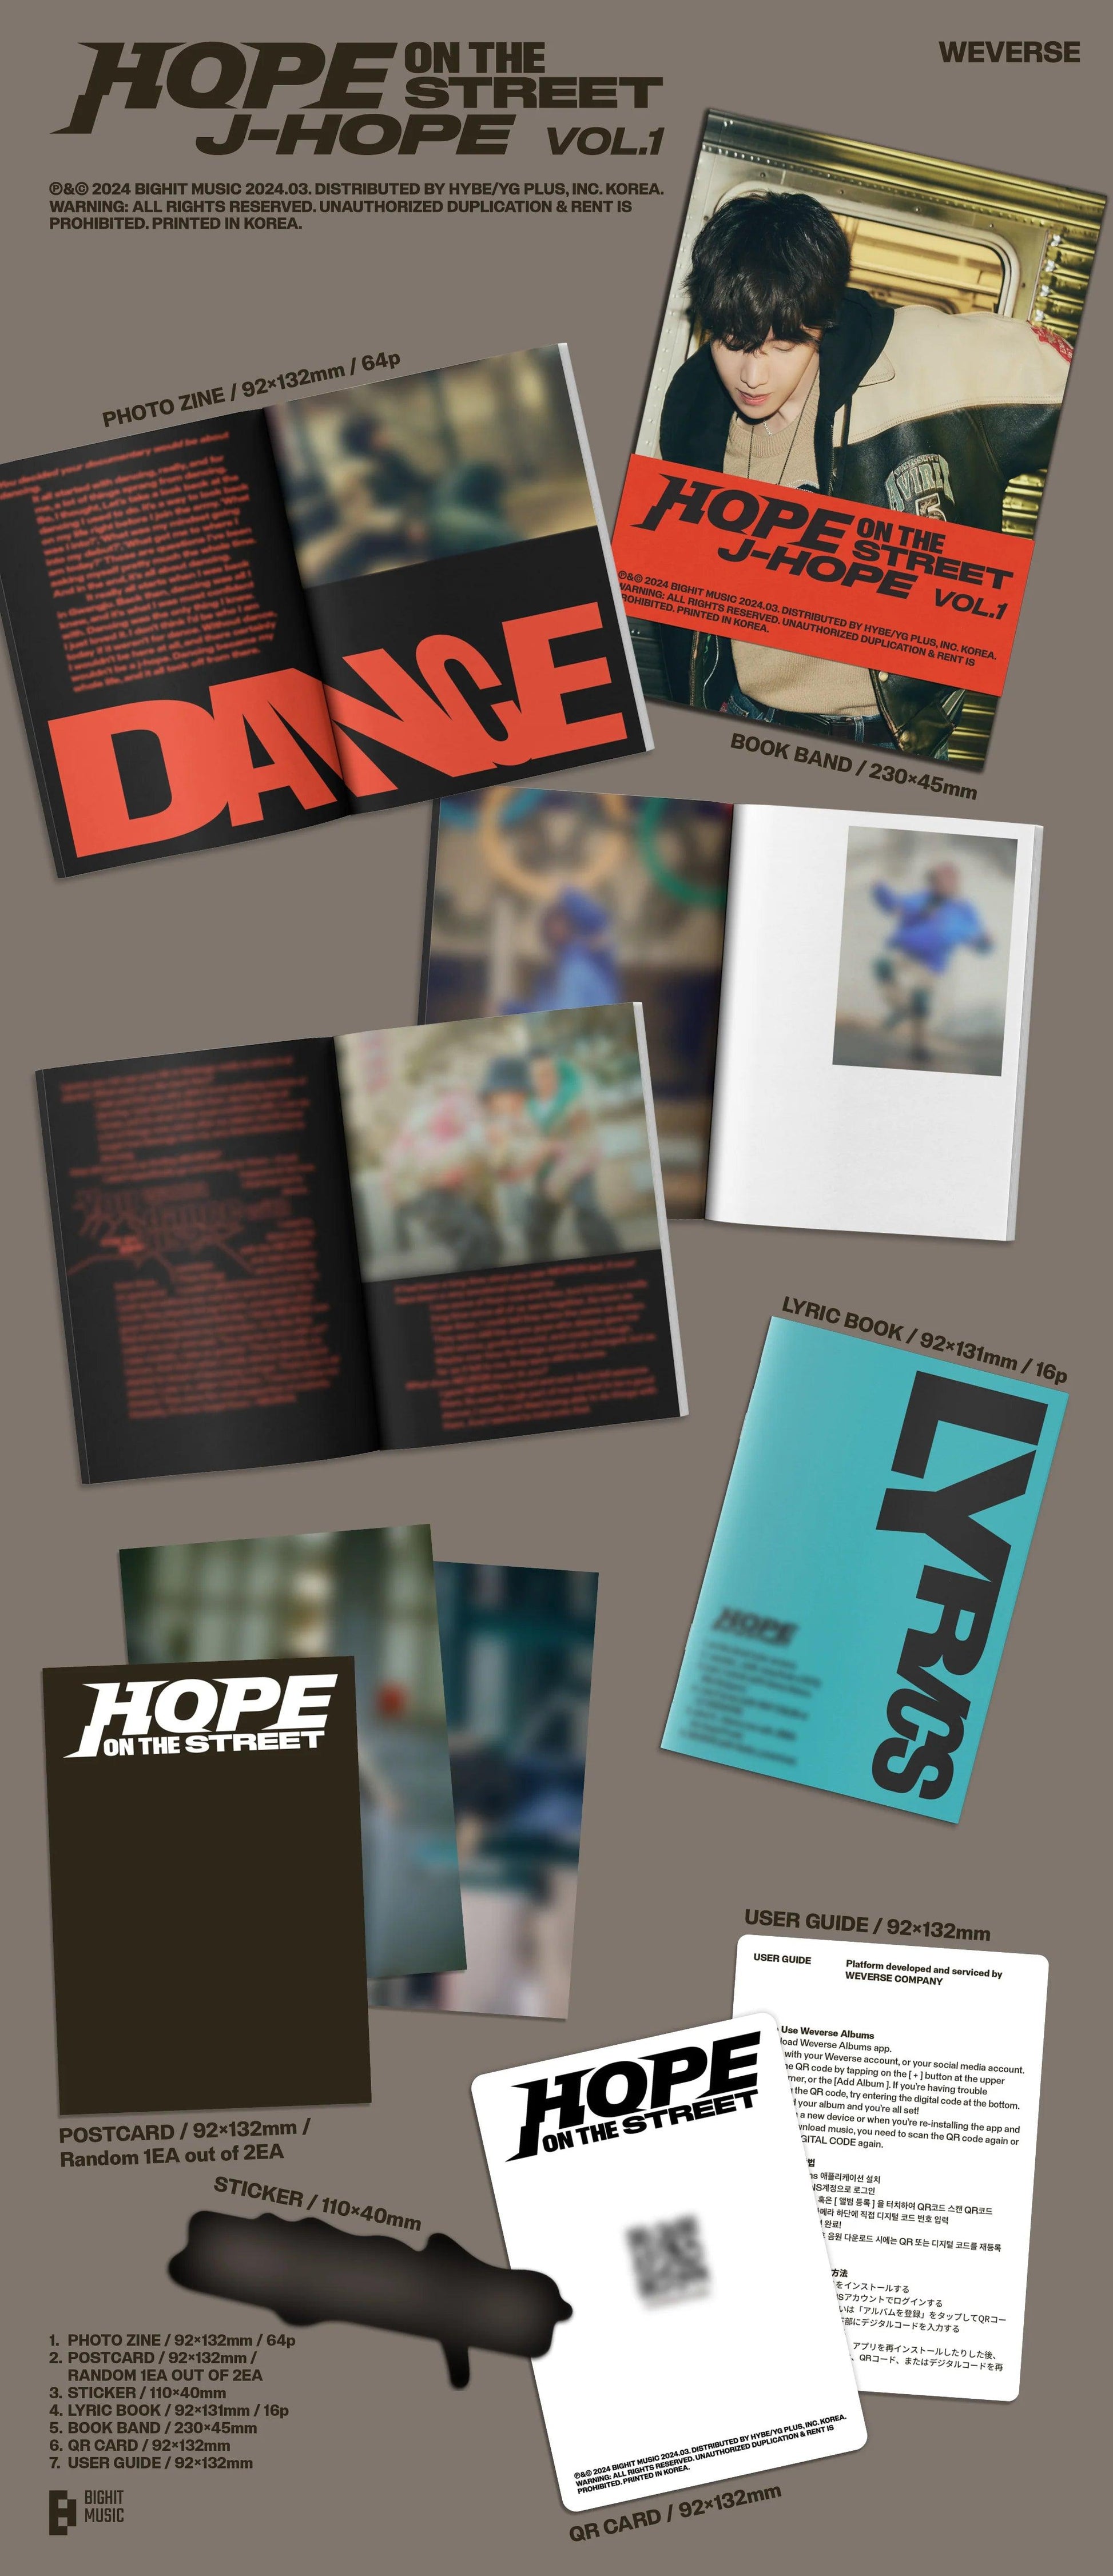 [PRE ORDER] J-HOPE (BTS) - [HOPE ON THE STREET Vol.01] (Weverse Album) (P.O.B Weverse Shop Gift) - KAEPJJANG SHOP (캡짱 숍)